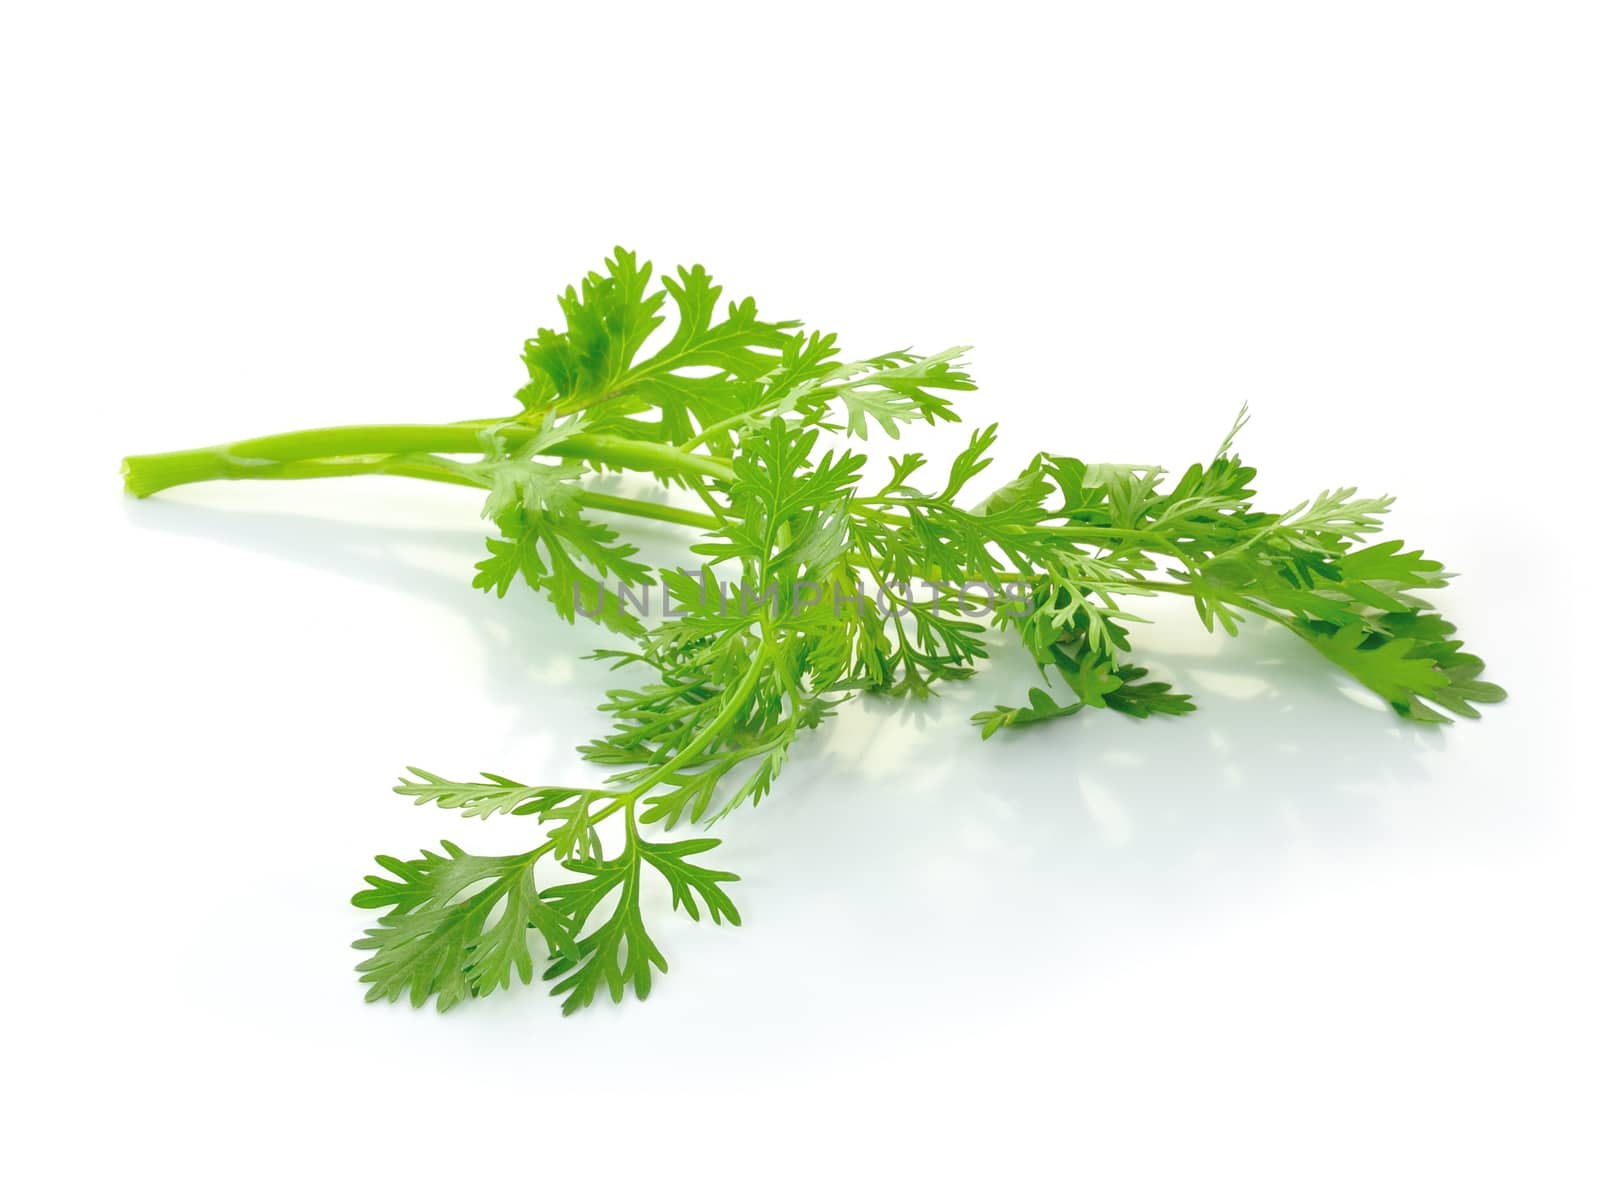 Fresh organic raw coriander leaf isolated on white background. Culinary aromatic herb.